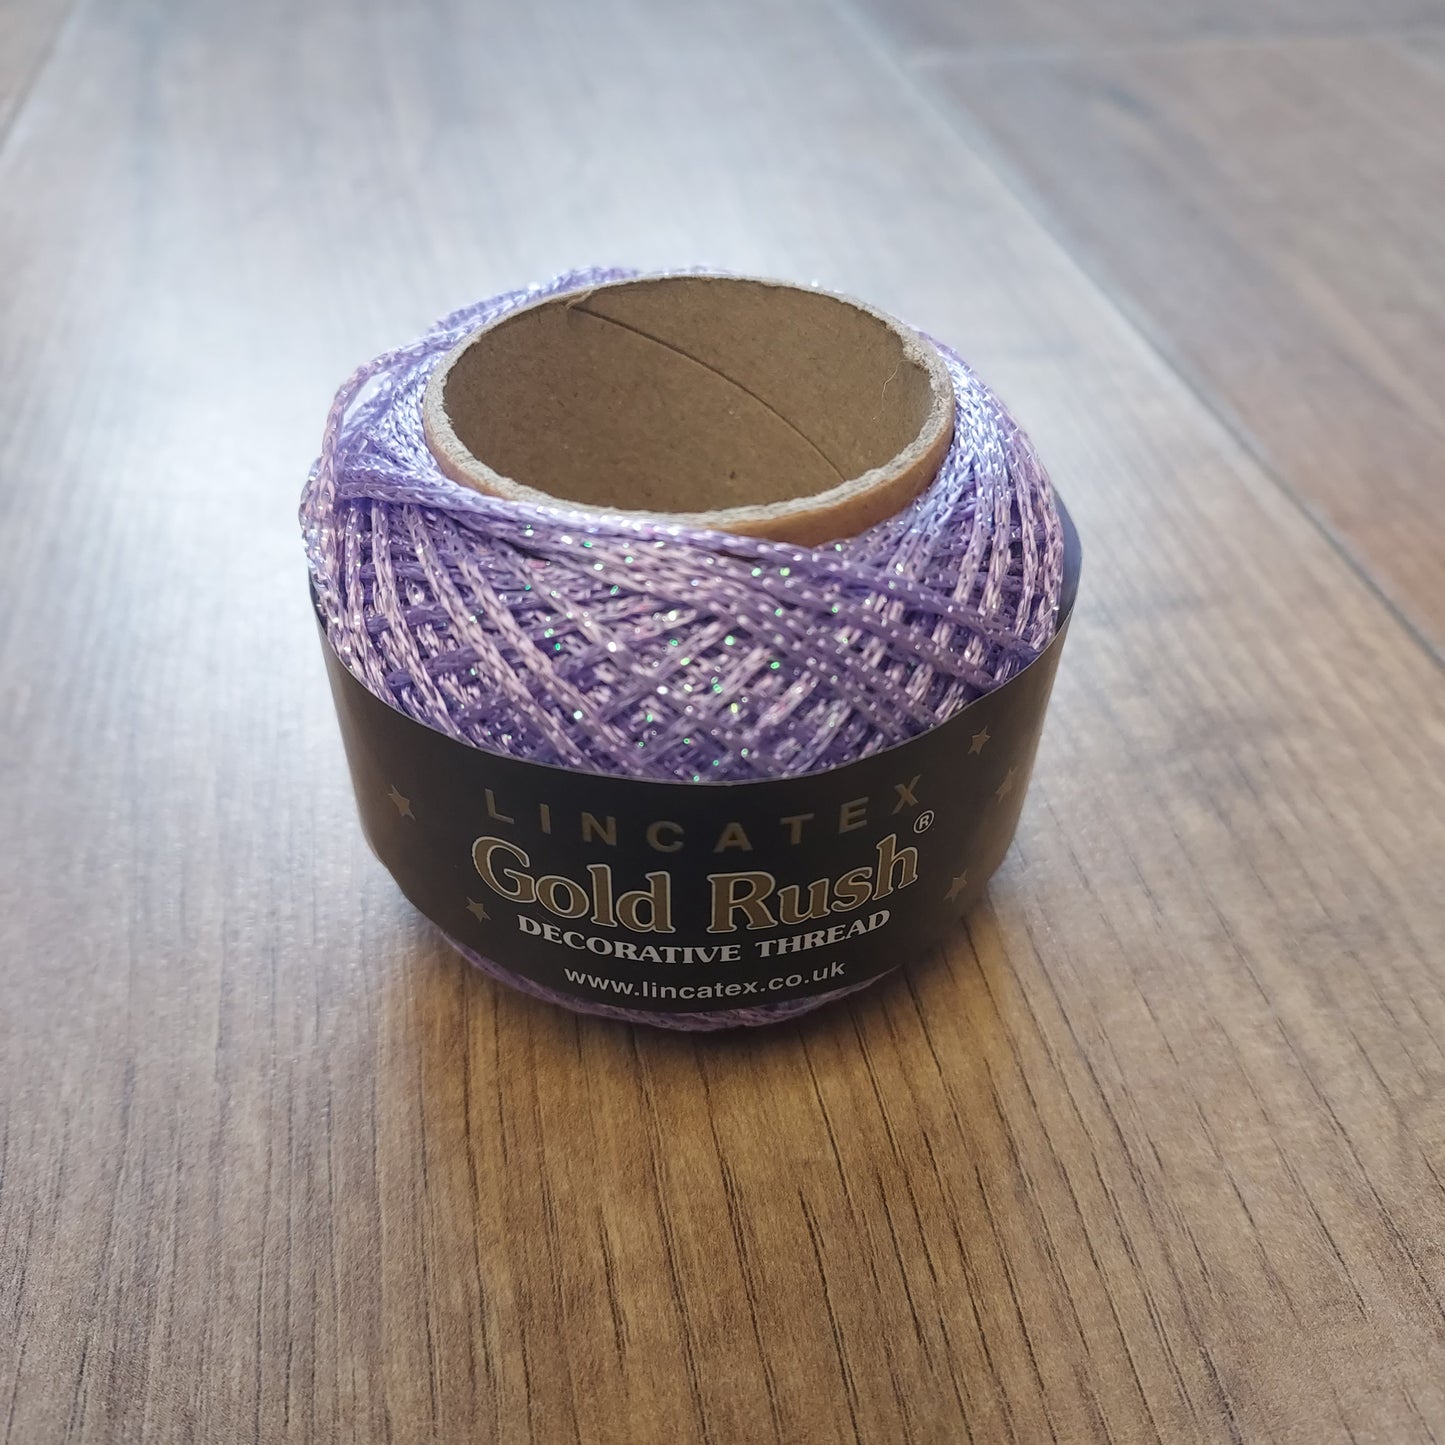 Lincatex Gold Rush Decorative Thread Crochet Yarn 20G